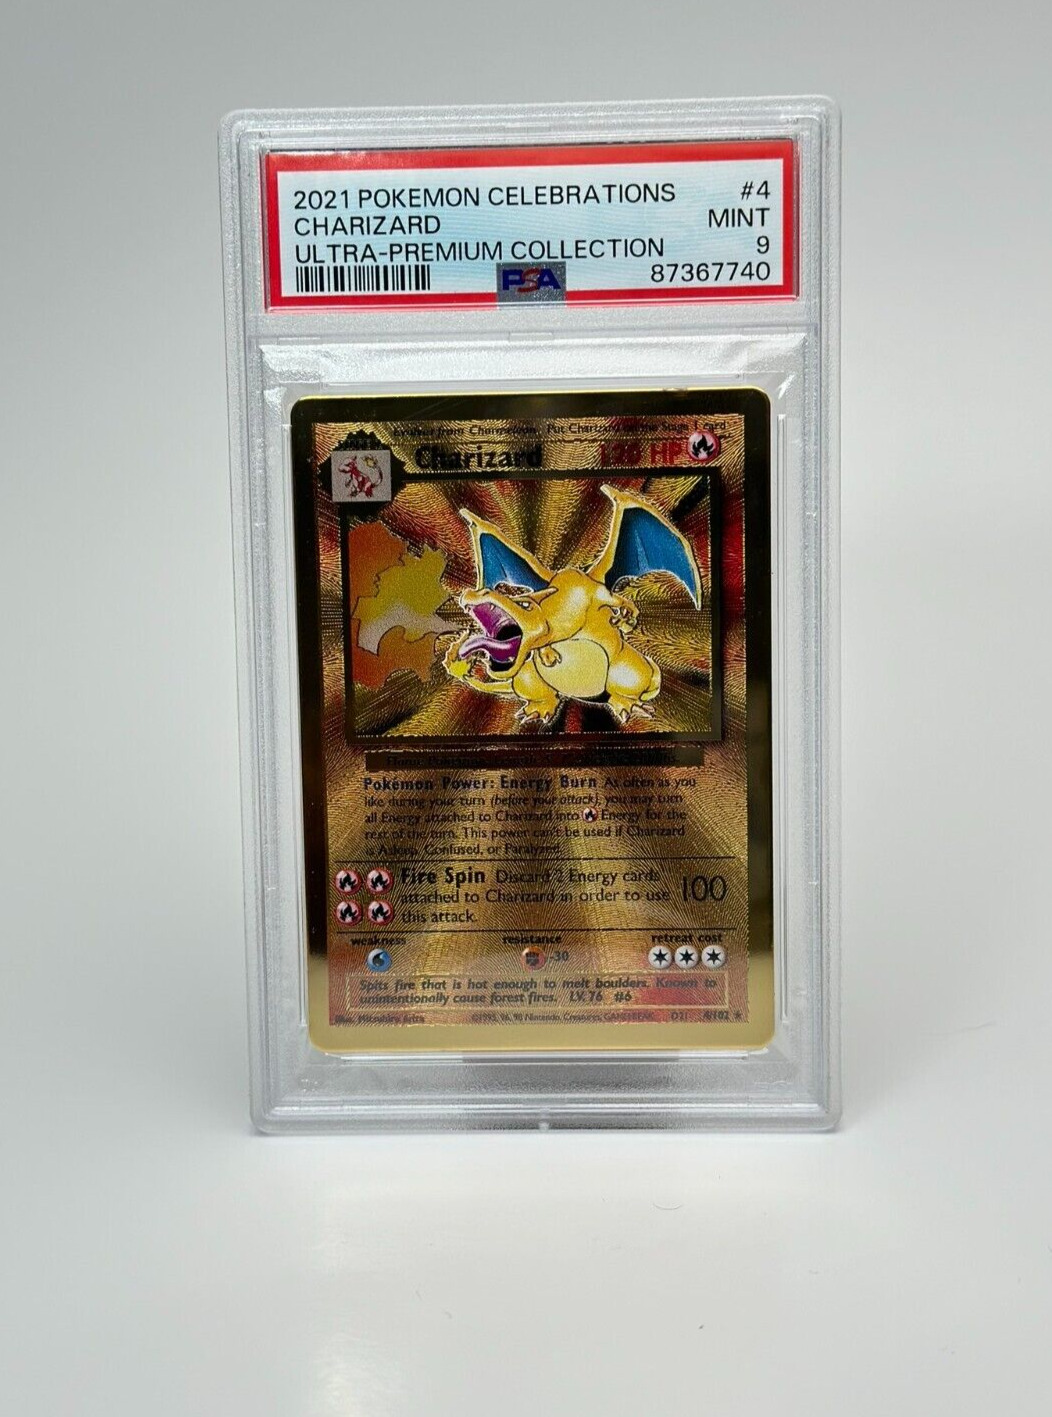 Pokémon: Charizard #4 GOLD Ultra Premium Collection Celebrations 2021 Card PSA 9